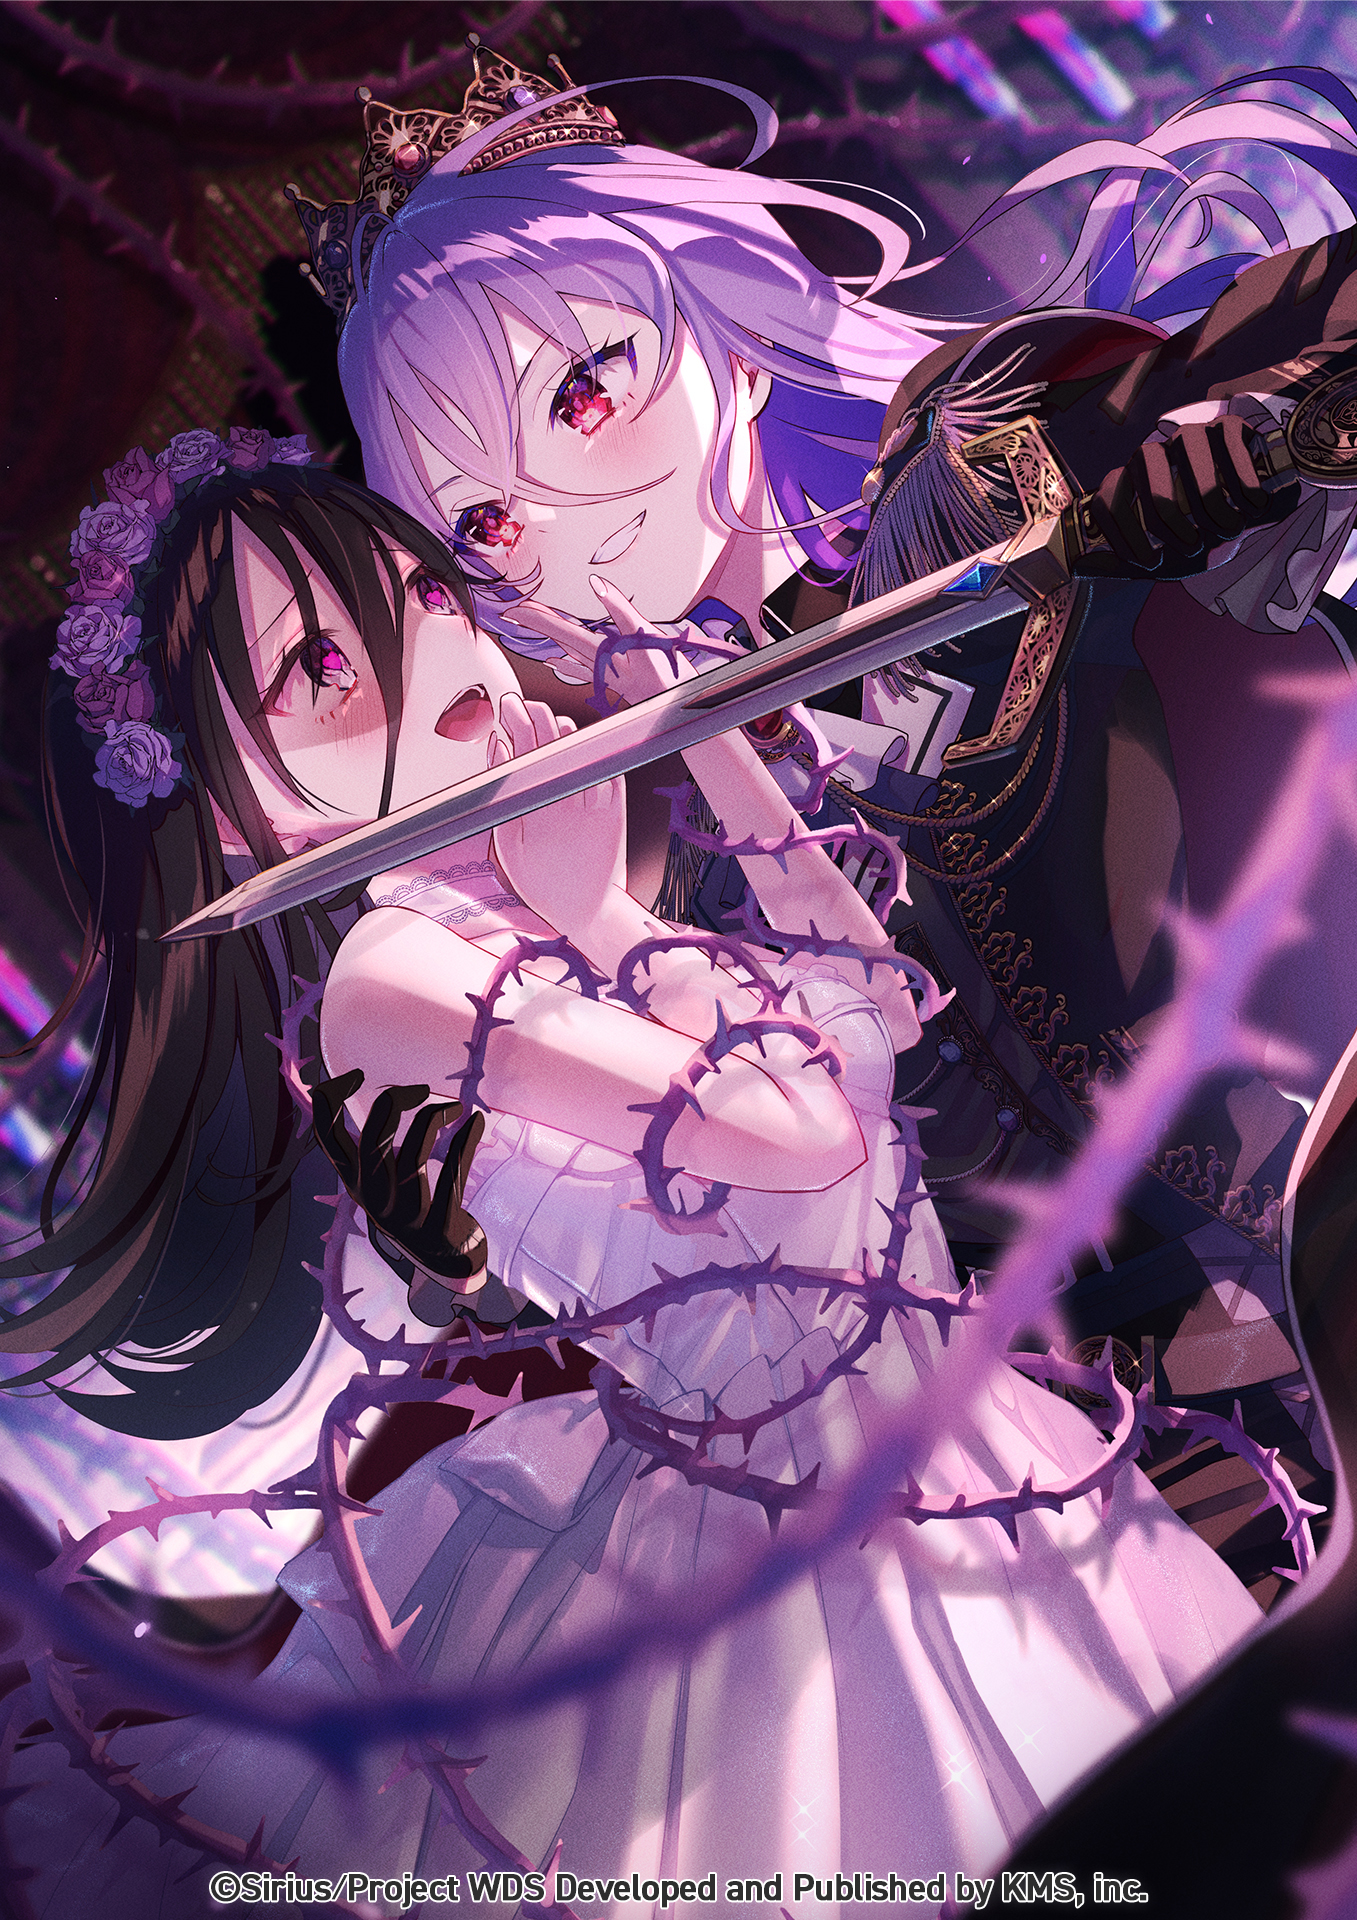 Anime Anime Girls Portrait Display Sword Watermarked Weapon Long Hair Vines Smiling Blushing Heart E 1357x1920